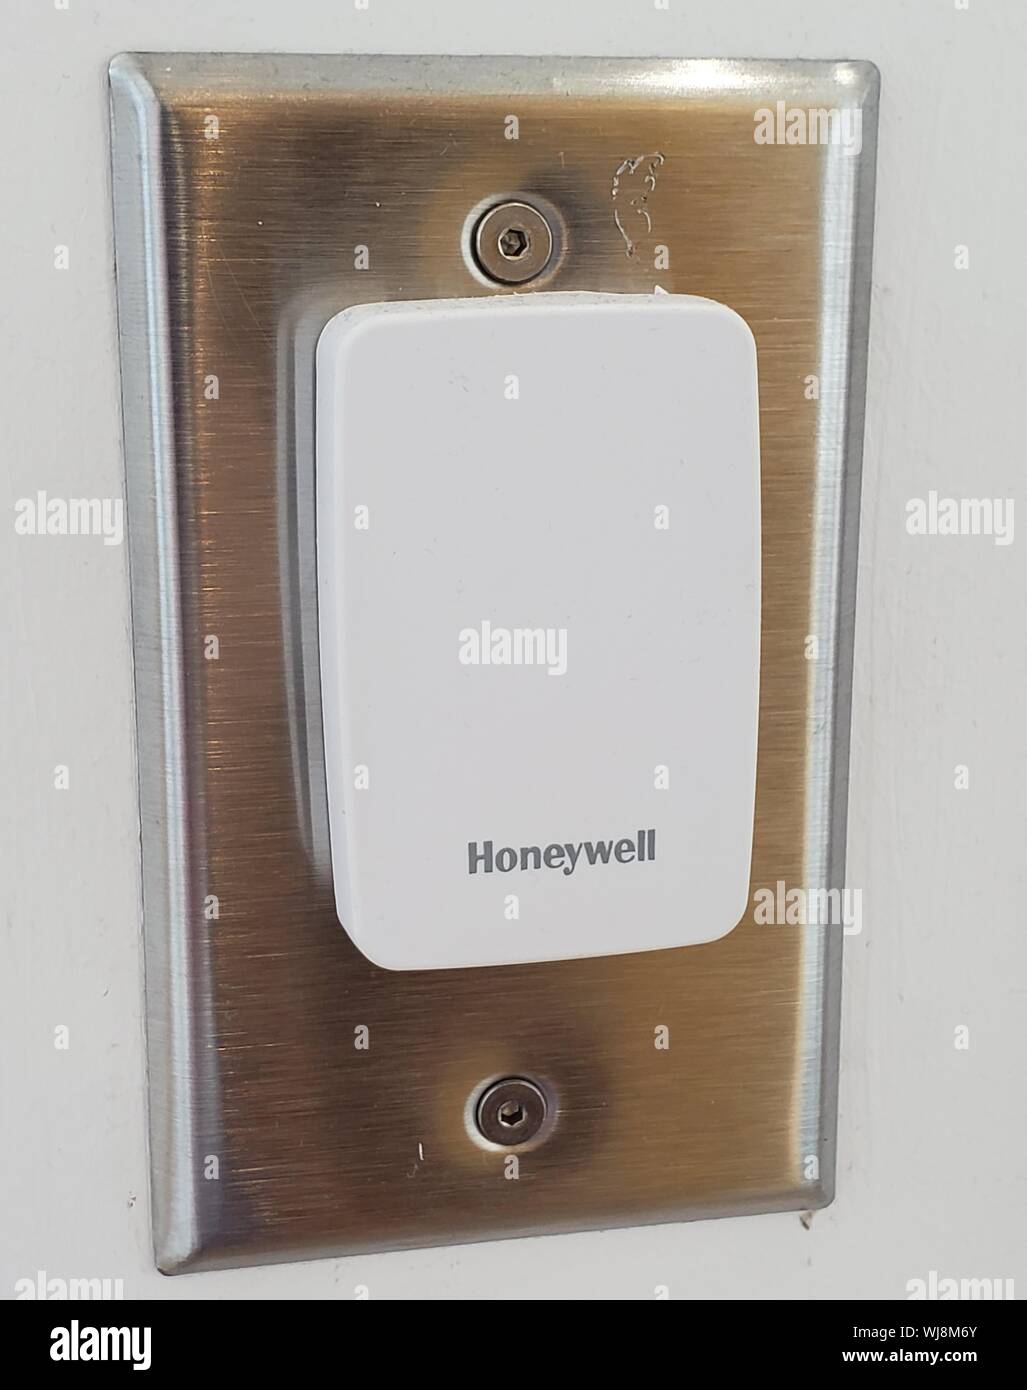 https://c8.alamy.com/comp/WJ8M6Y/close-up-of-hvac-temperature-sensor-from-honeywell-september-2-2019-WJ8M6Y.jpg